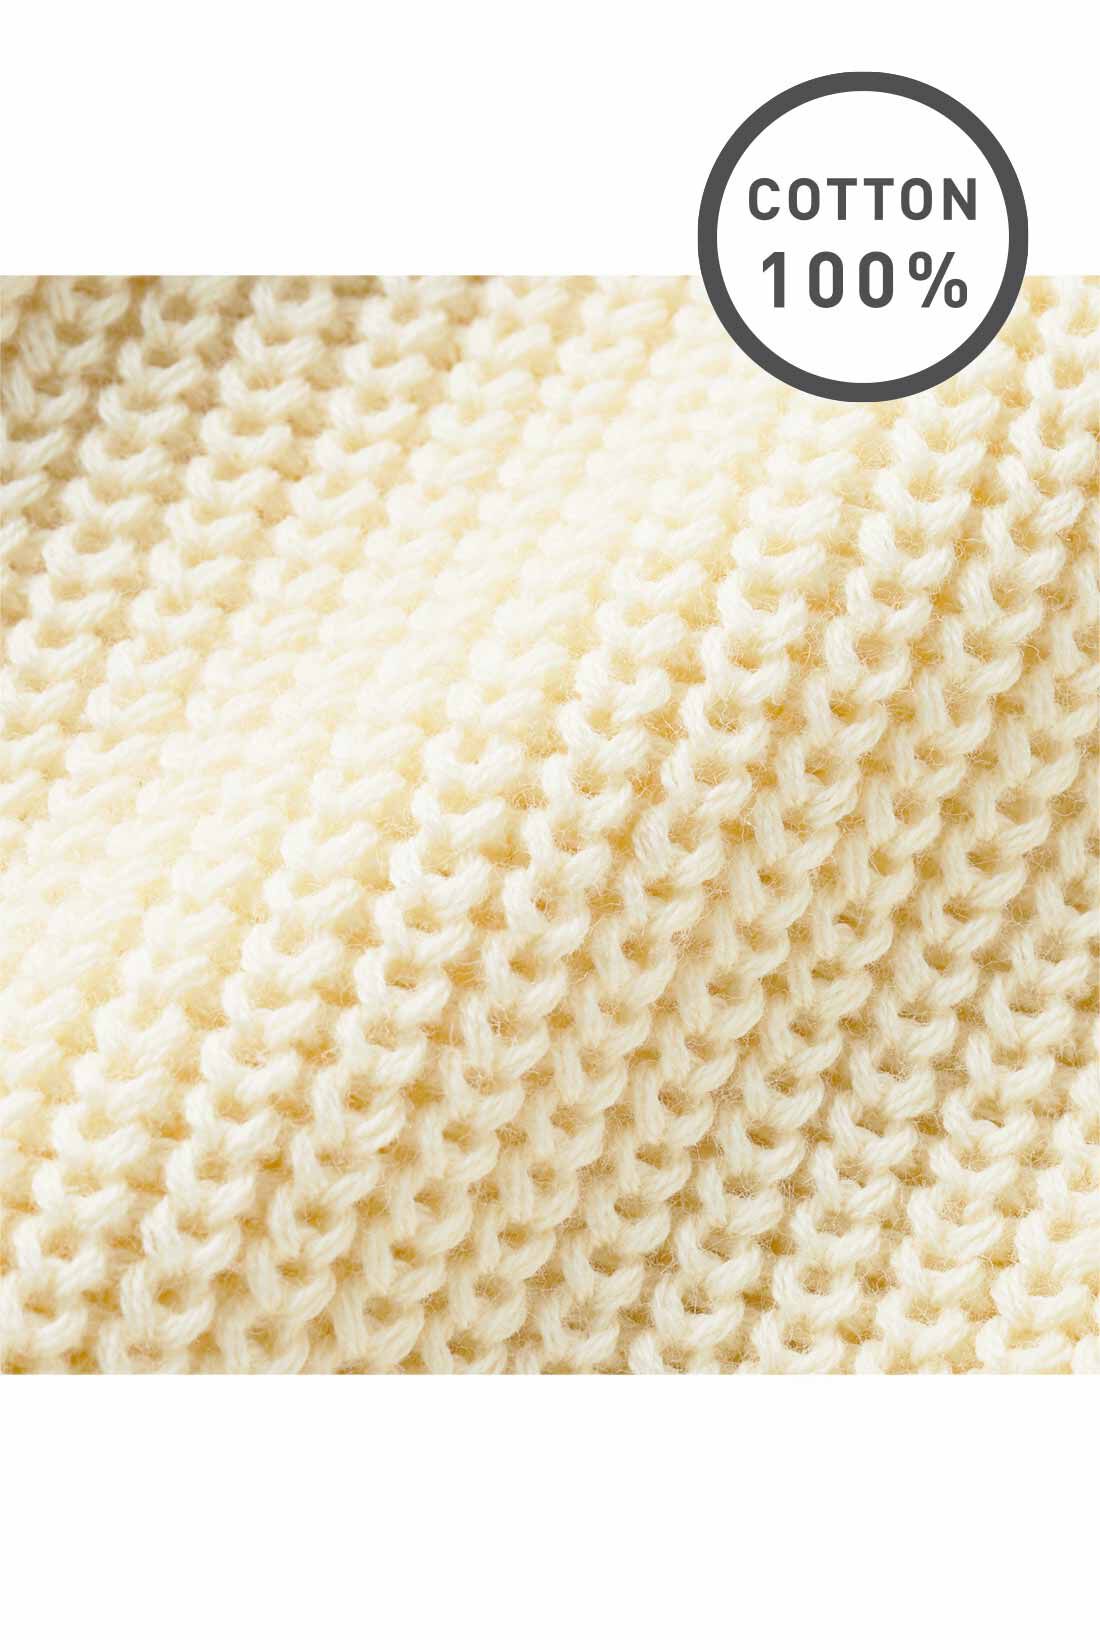 Live in  comfort|Live love cotton（R）プロジェクト リブ イン コンフォート  コーディネートが楽しくなる オーガニックコットンニットベスト〈オフホワイト〉|インド産オーガニックコットンをあぜ編みでふっくら編み立てました。